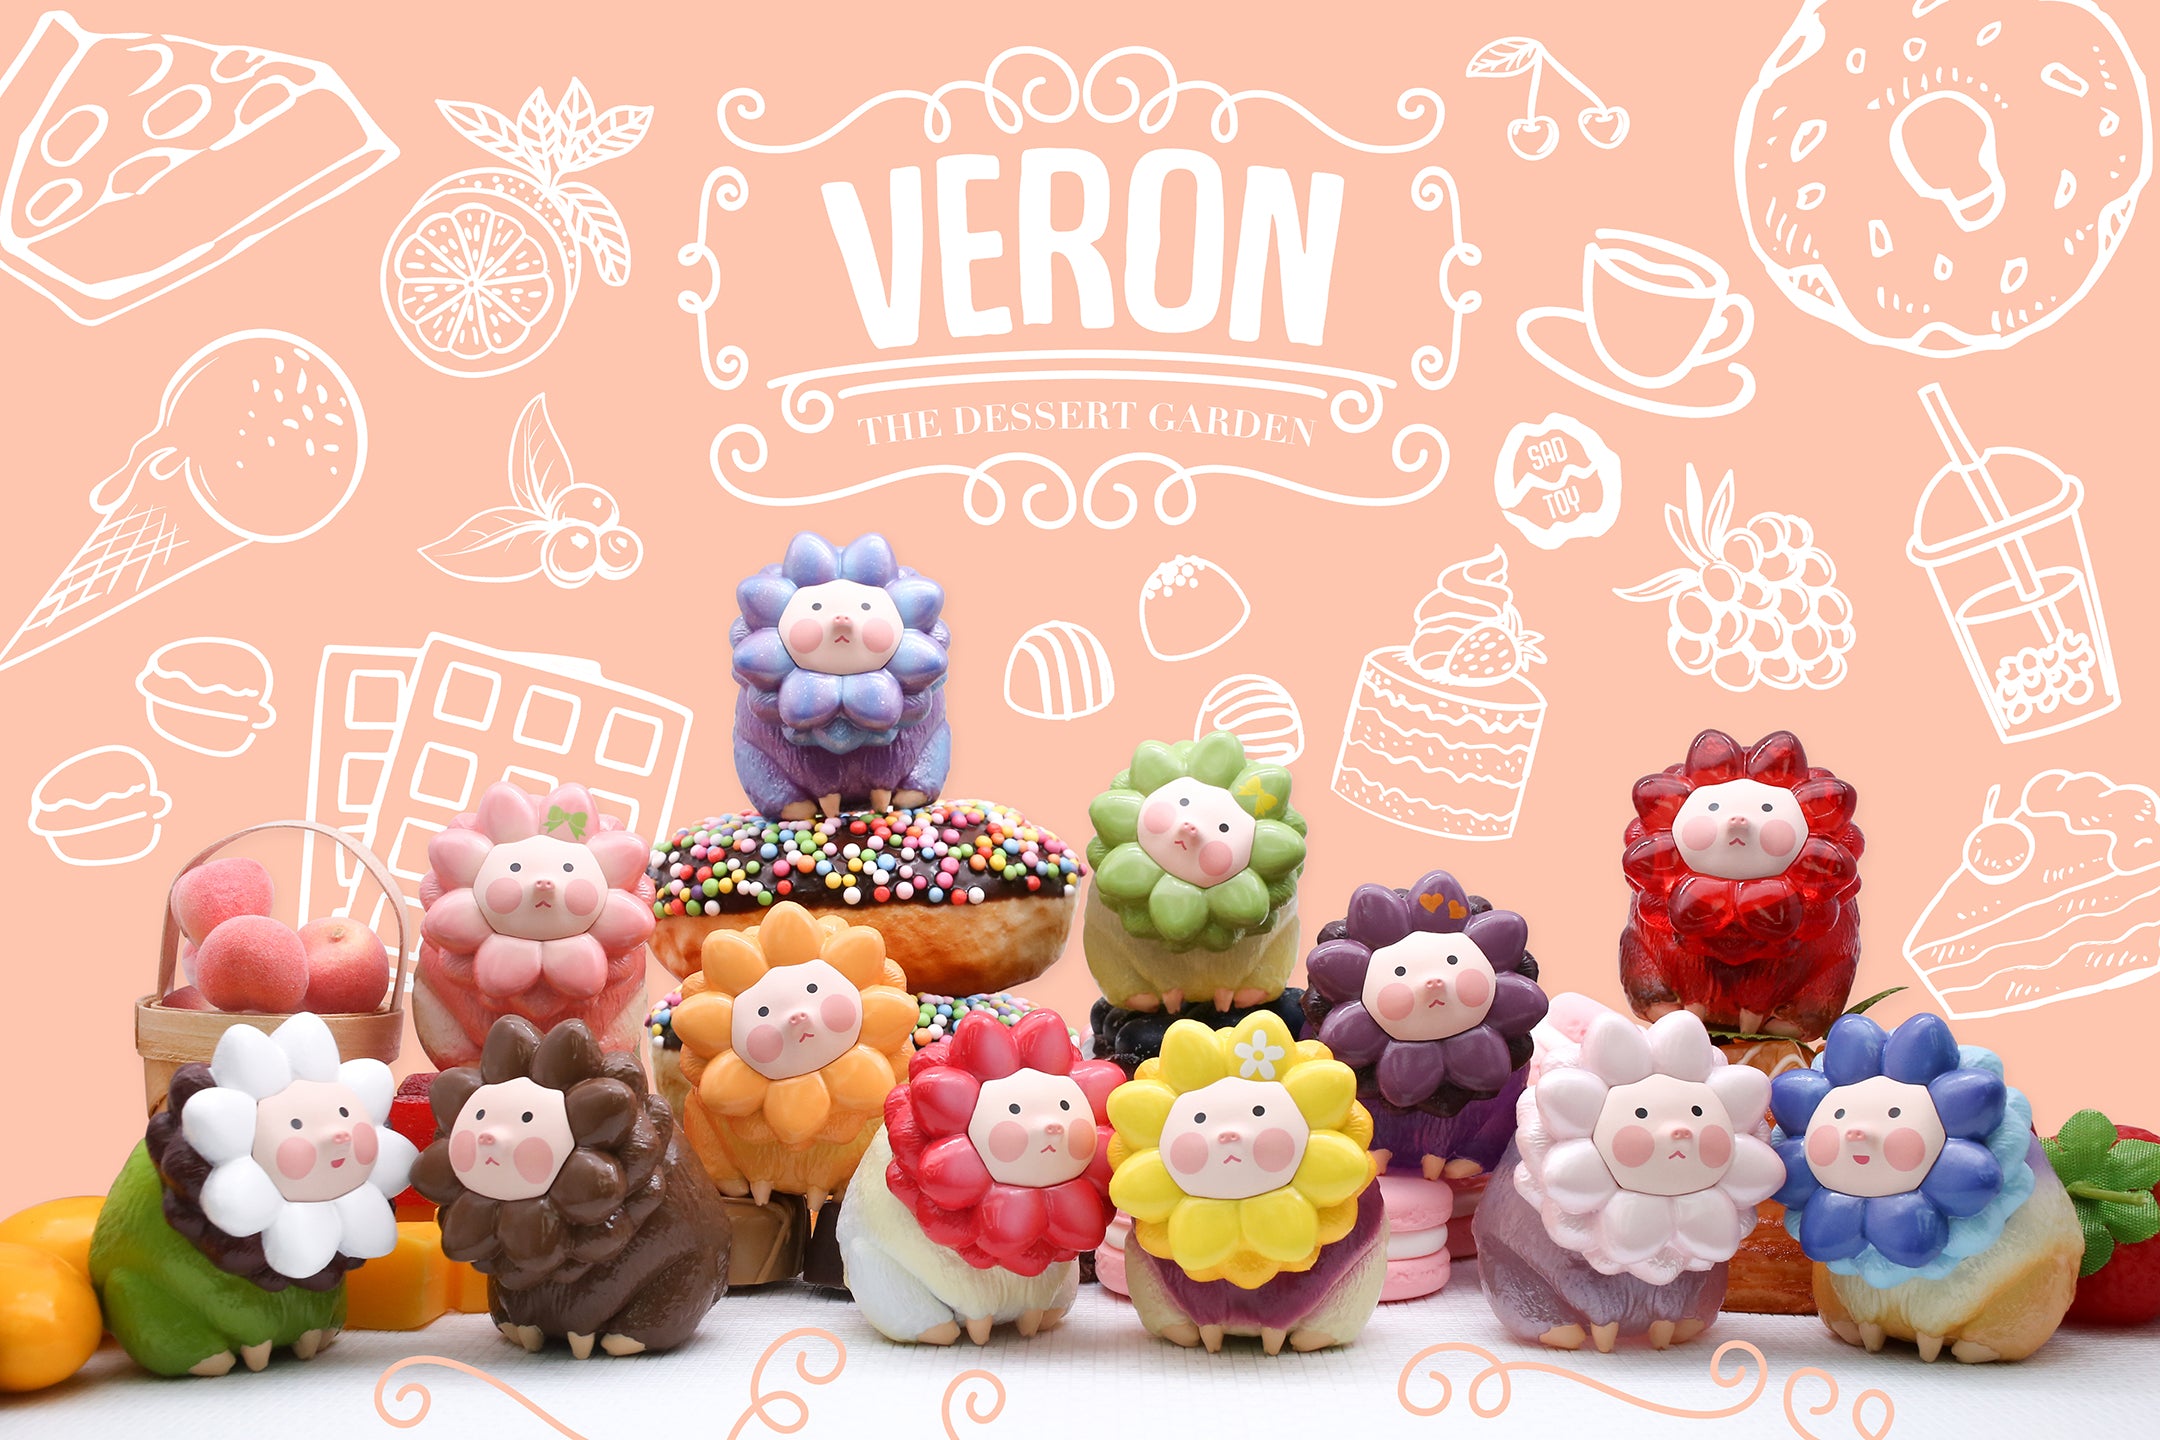 A variety of dessert-themed toys from Veron The Dessert Garden Blindbox Series by 9Sad.